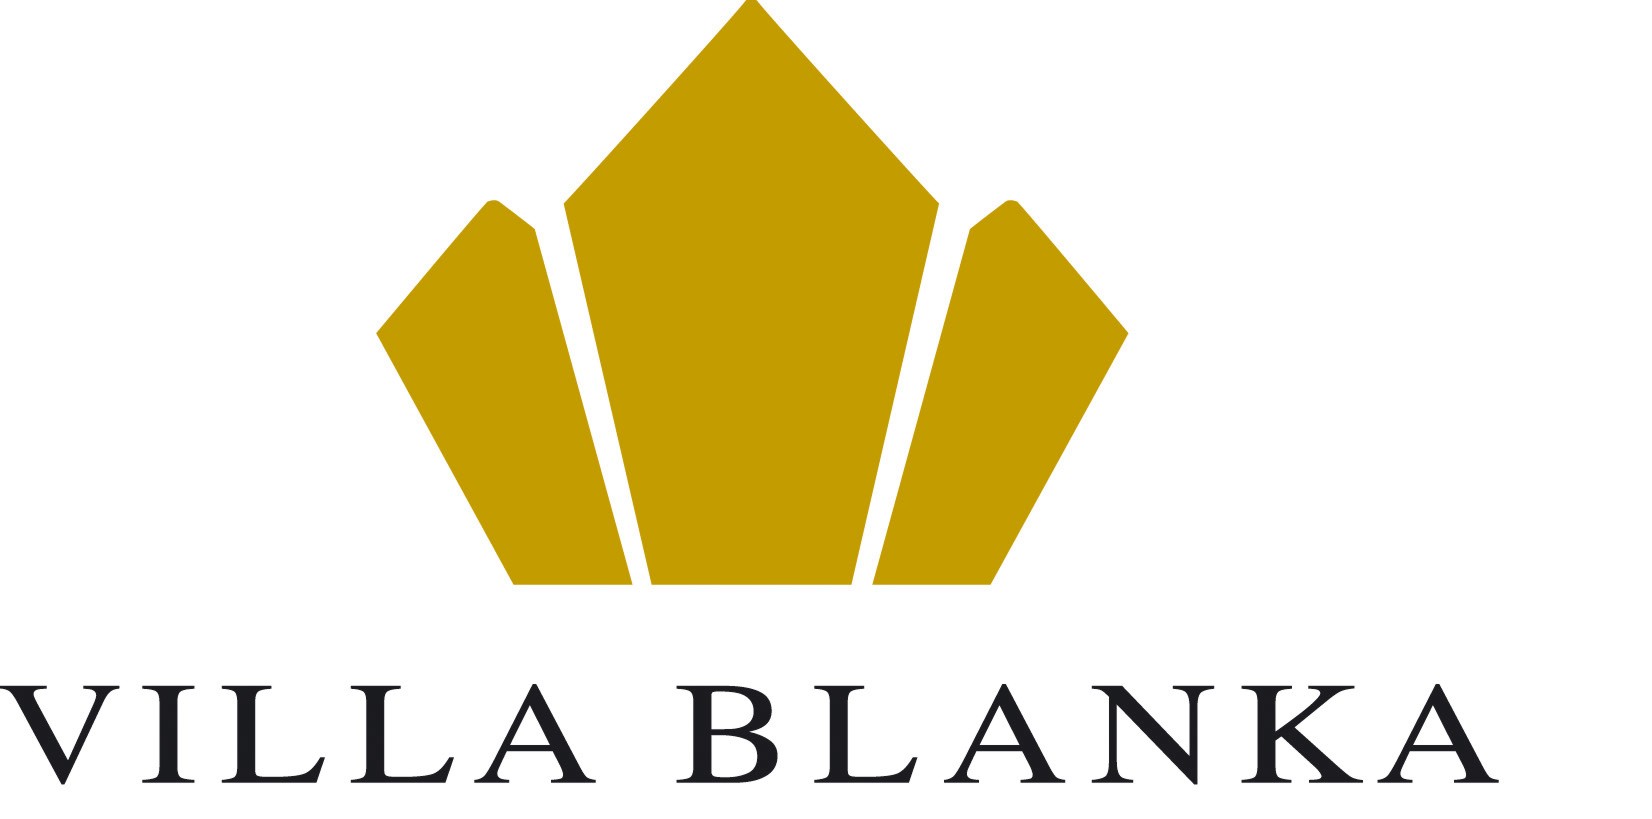 Blanka - Wikipedia